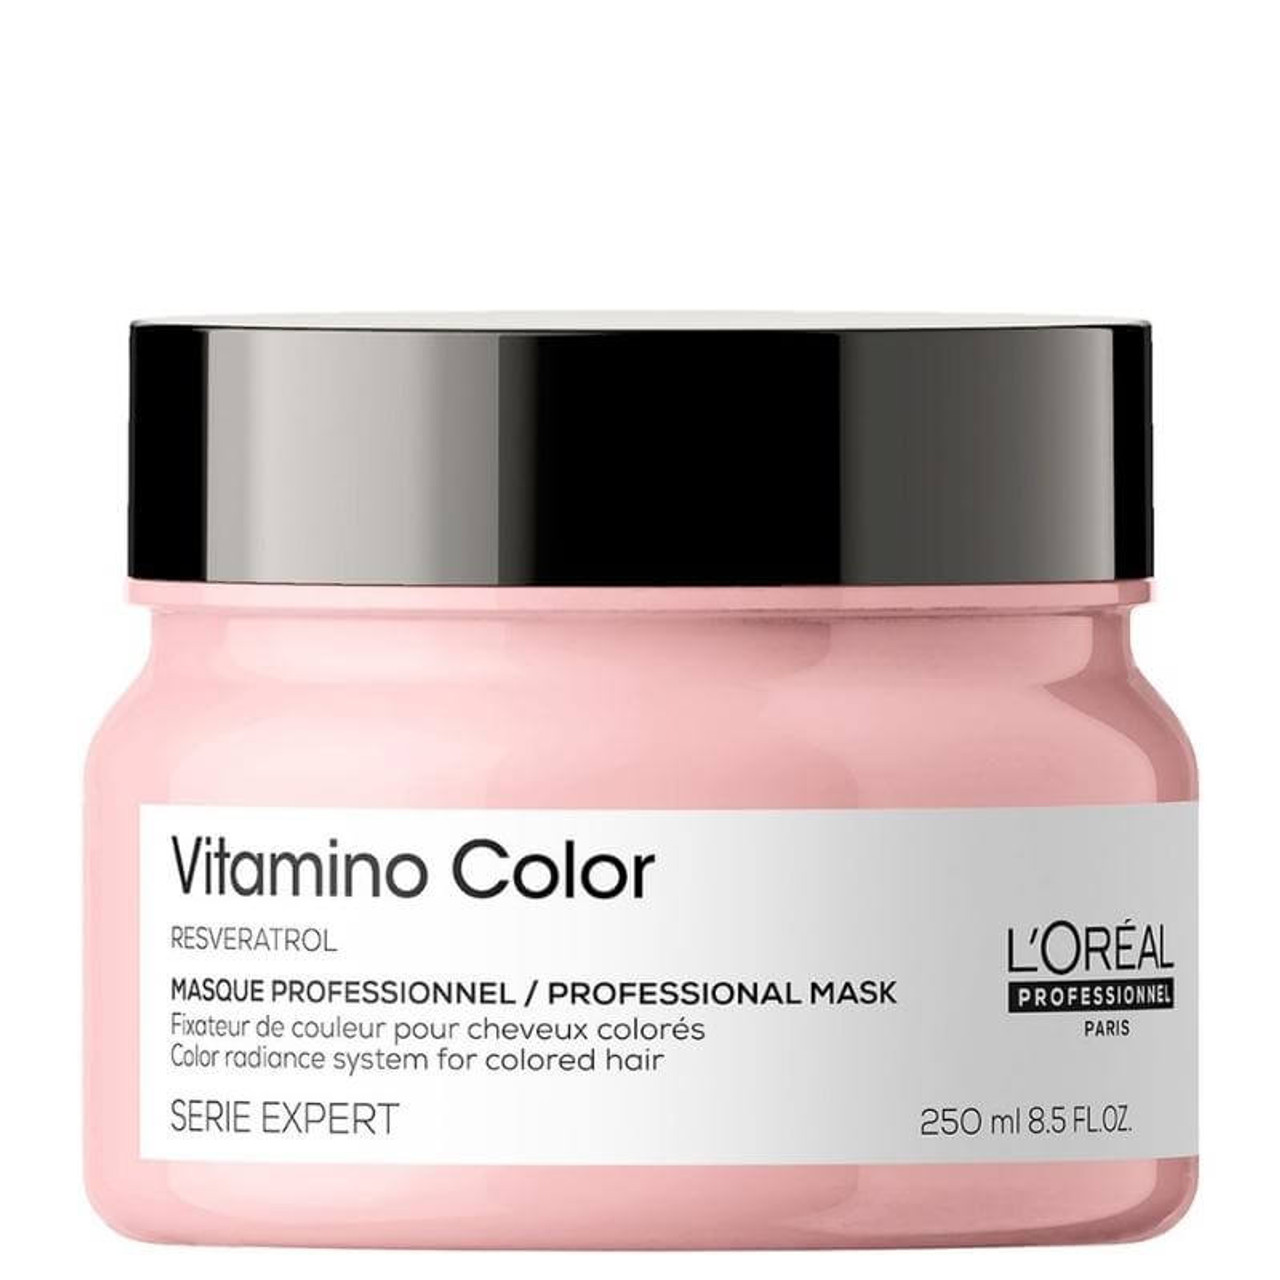 L'Oréal Professionnel Vitamino Color Mask 250ml : BeautyFeatures